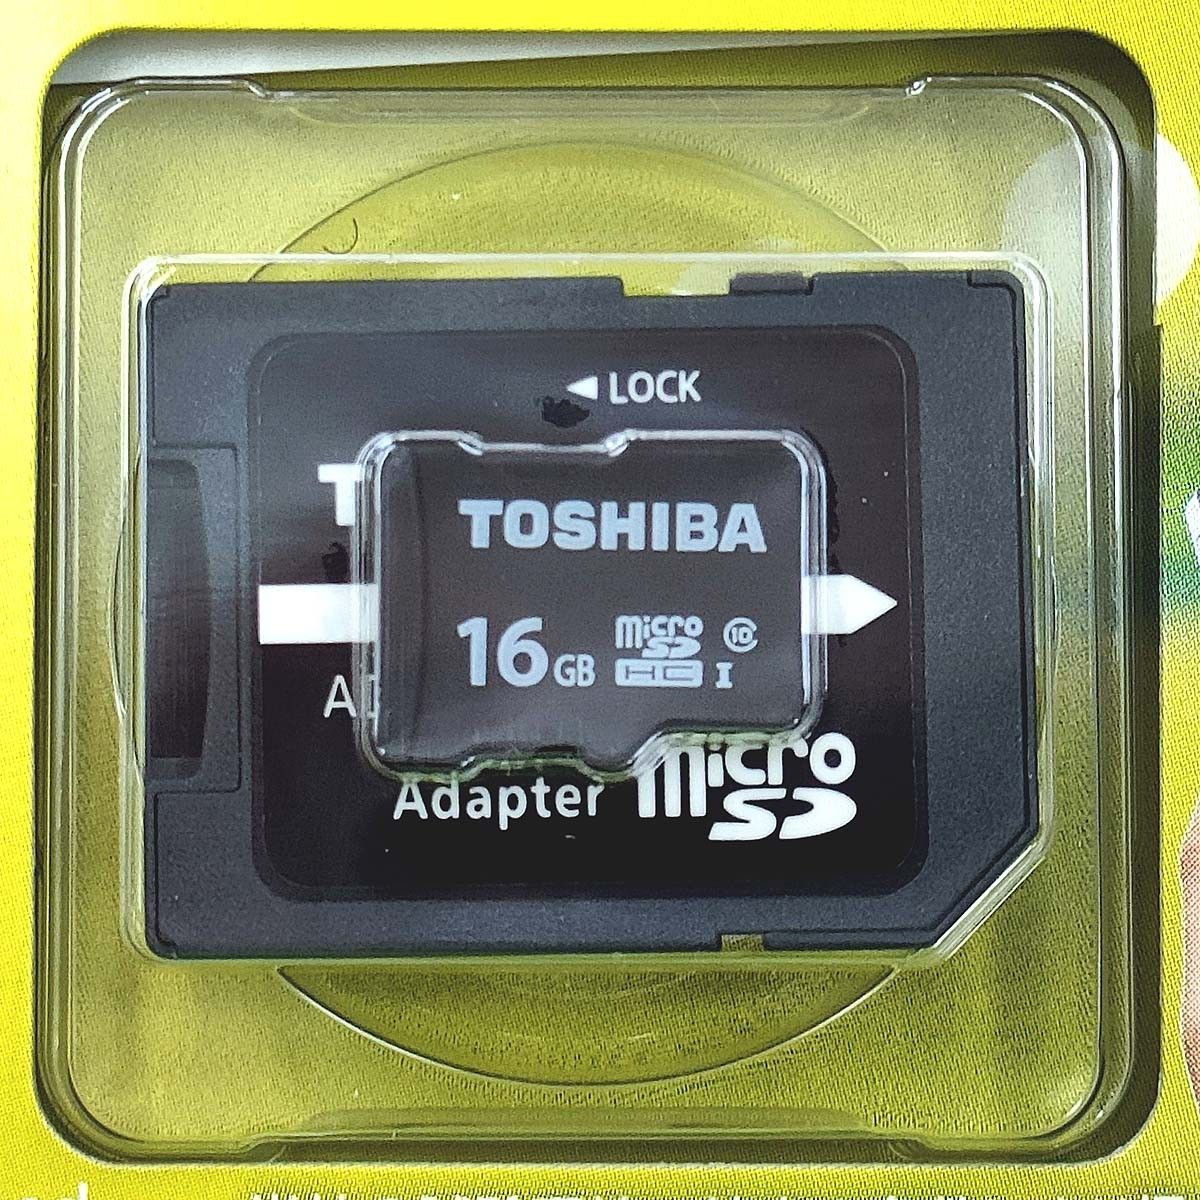 microSDHCカード【16GB】CLASS10 東芝 TOSHIBA MSDAR40N16G UHS-I 変換アダプタ付 新品